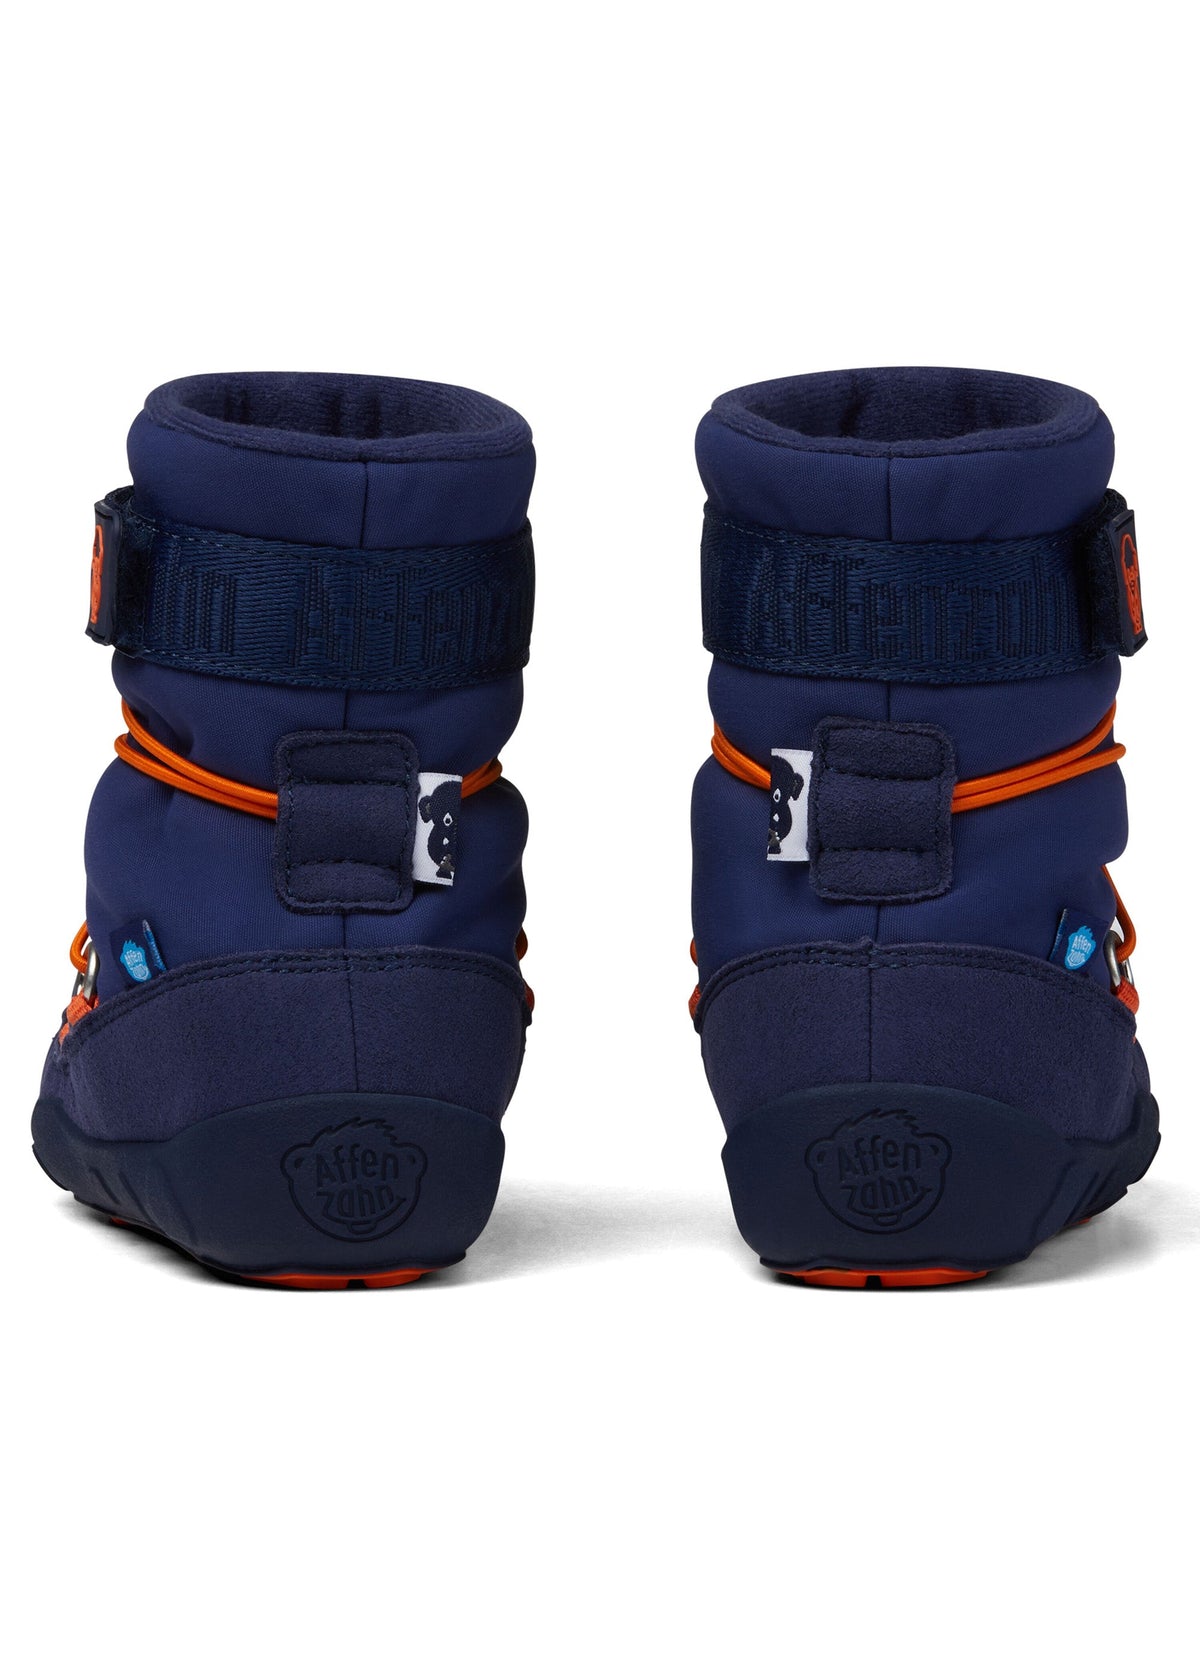 Children's barefoot shoes - Snowboot Elephant, winter shoes with TEX membrane - dark blue, vegan